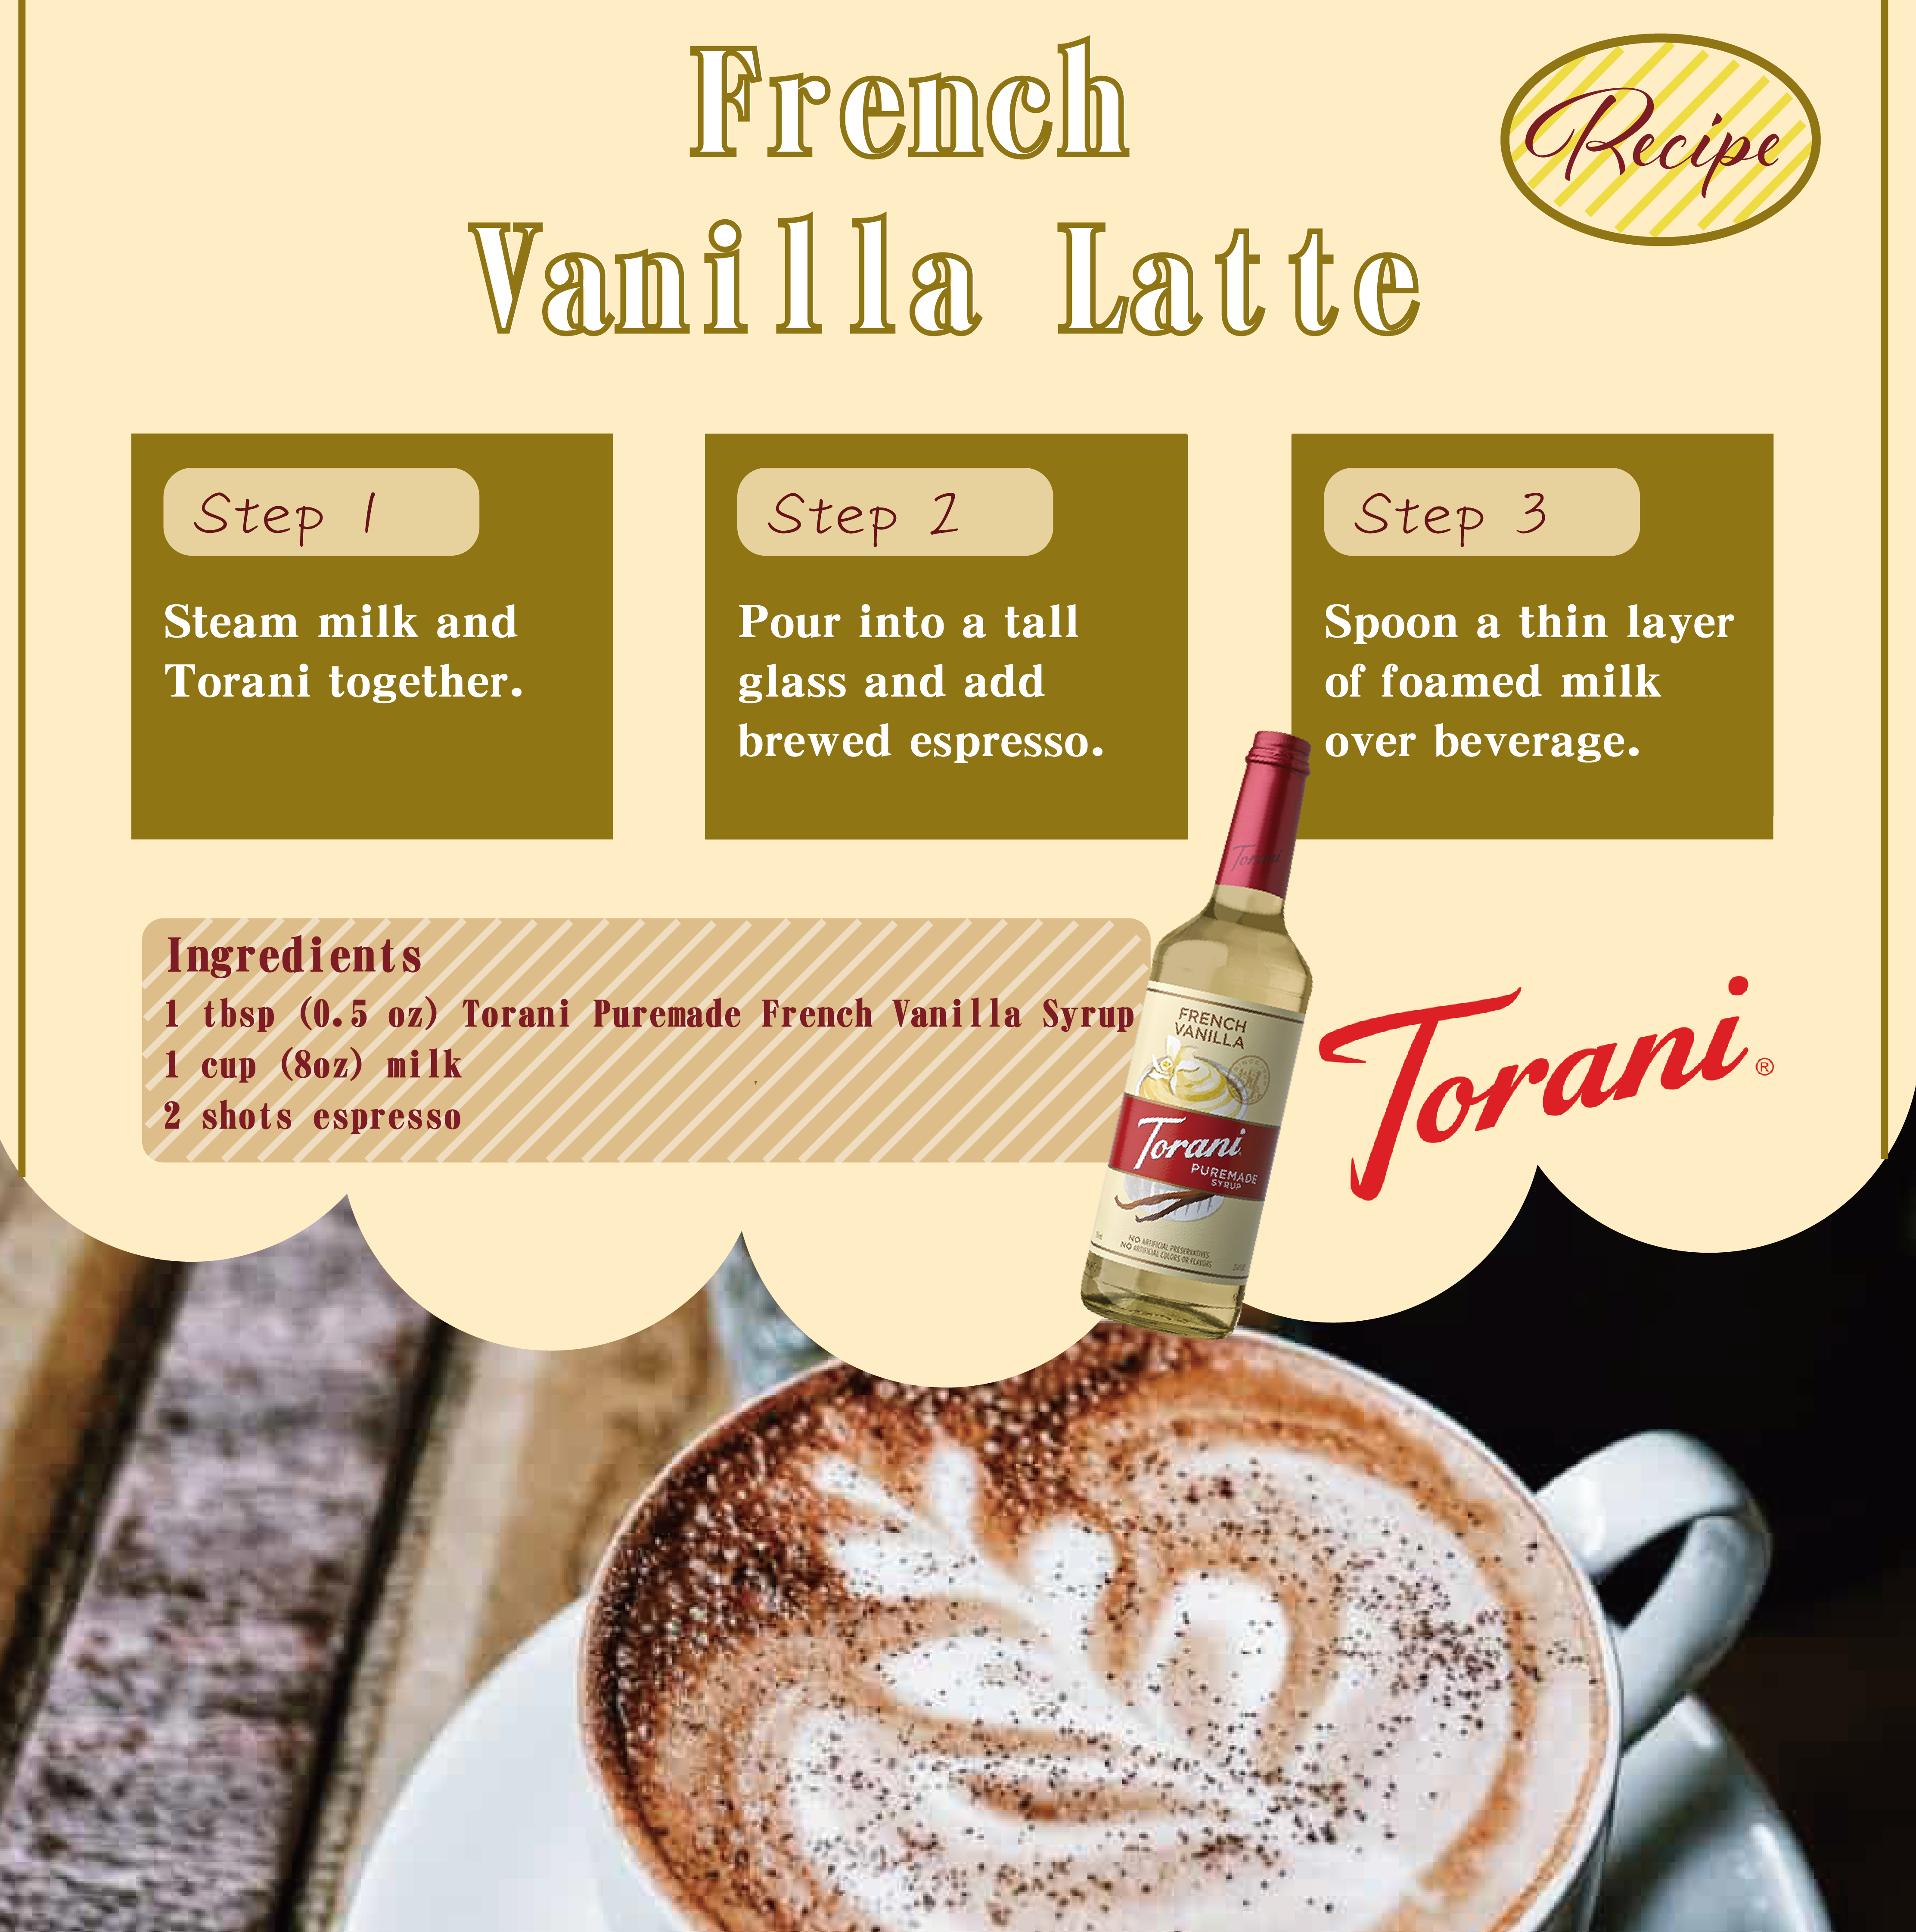 Torani: French Vanilla Latte